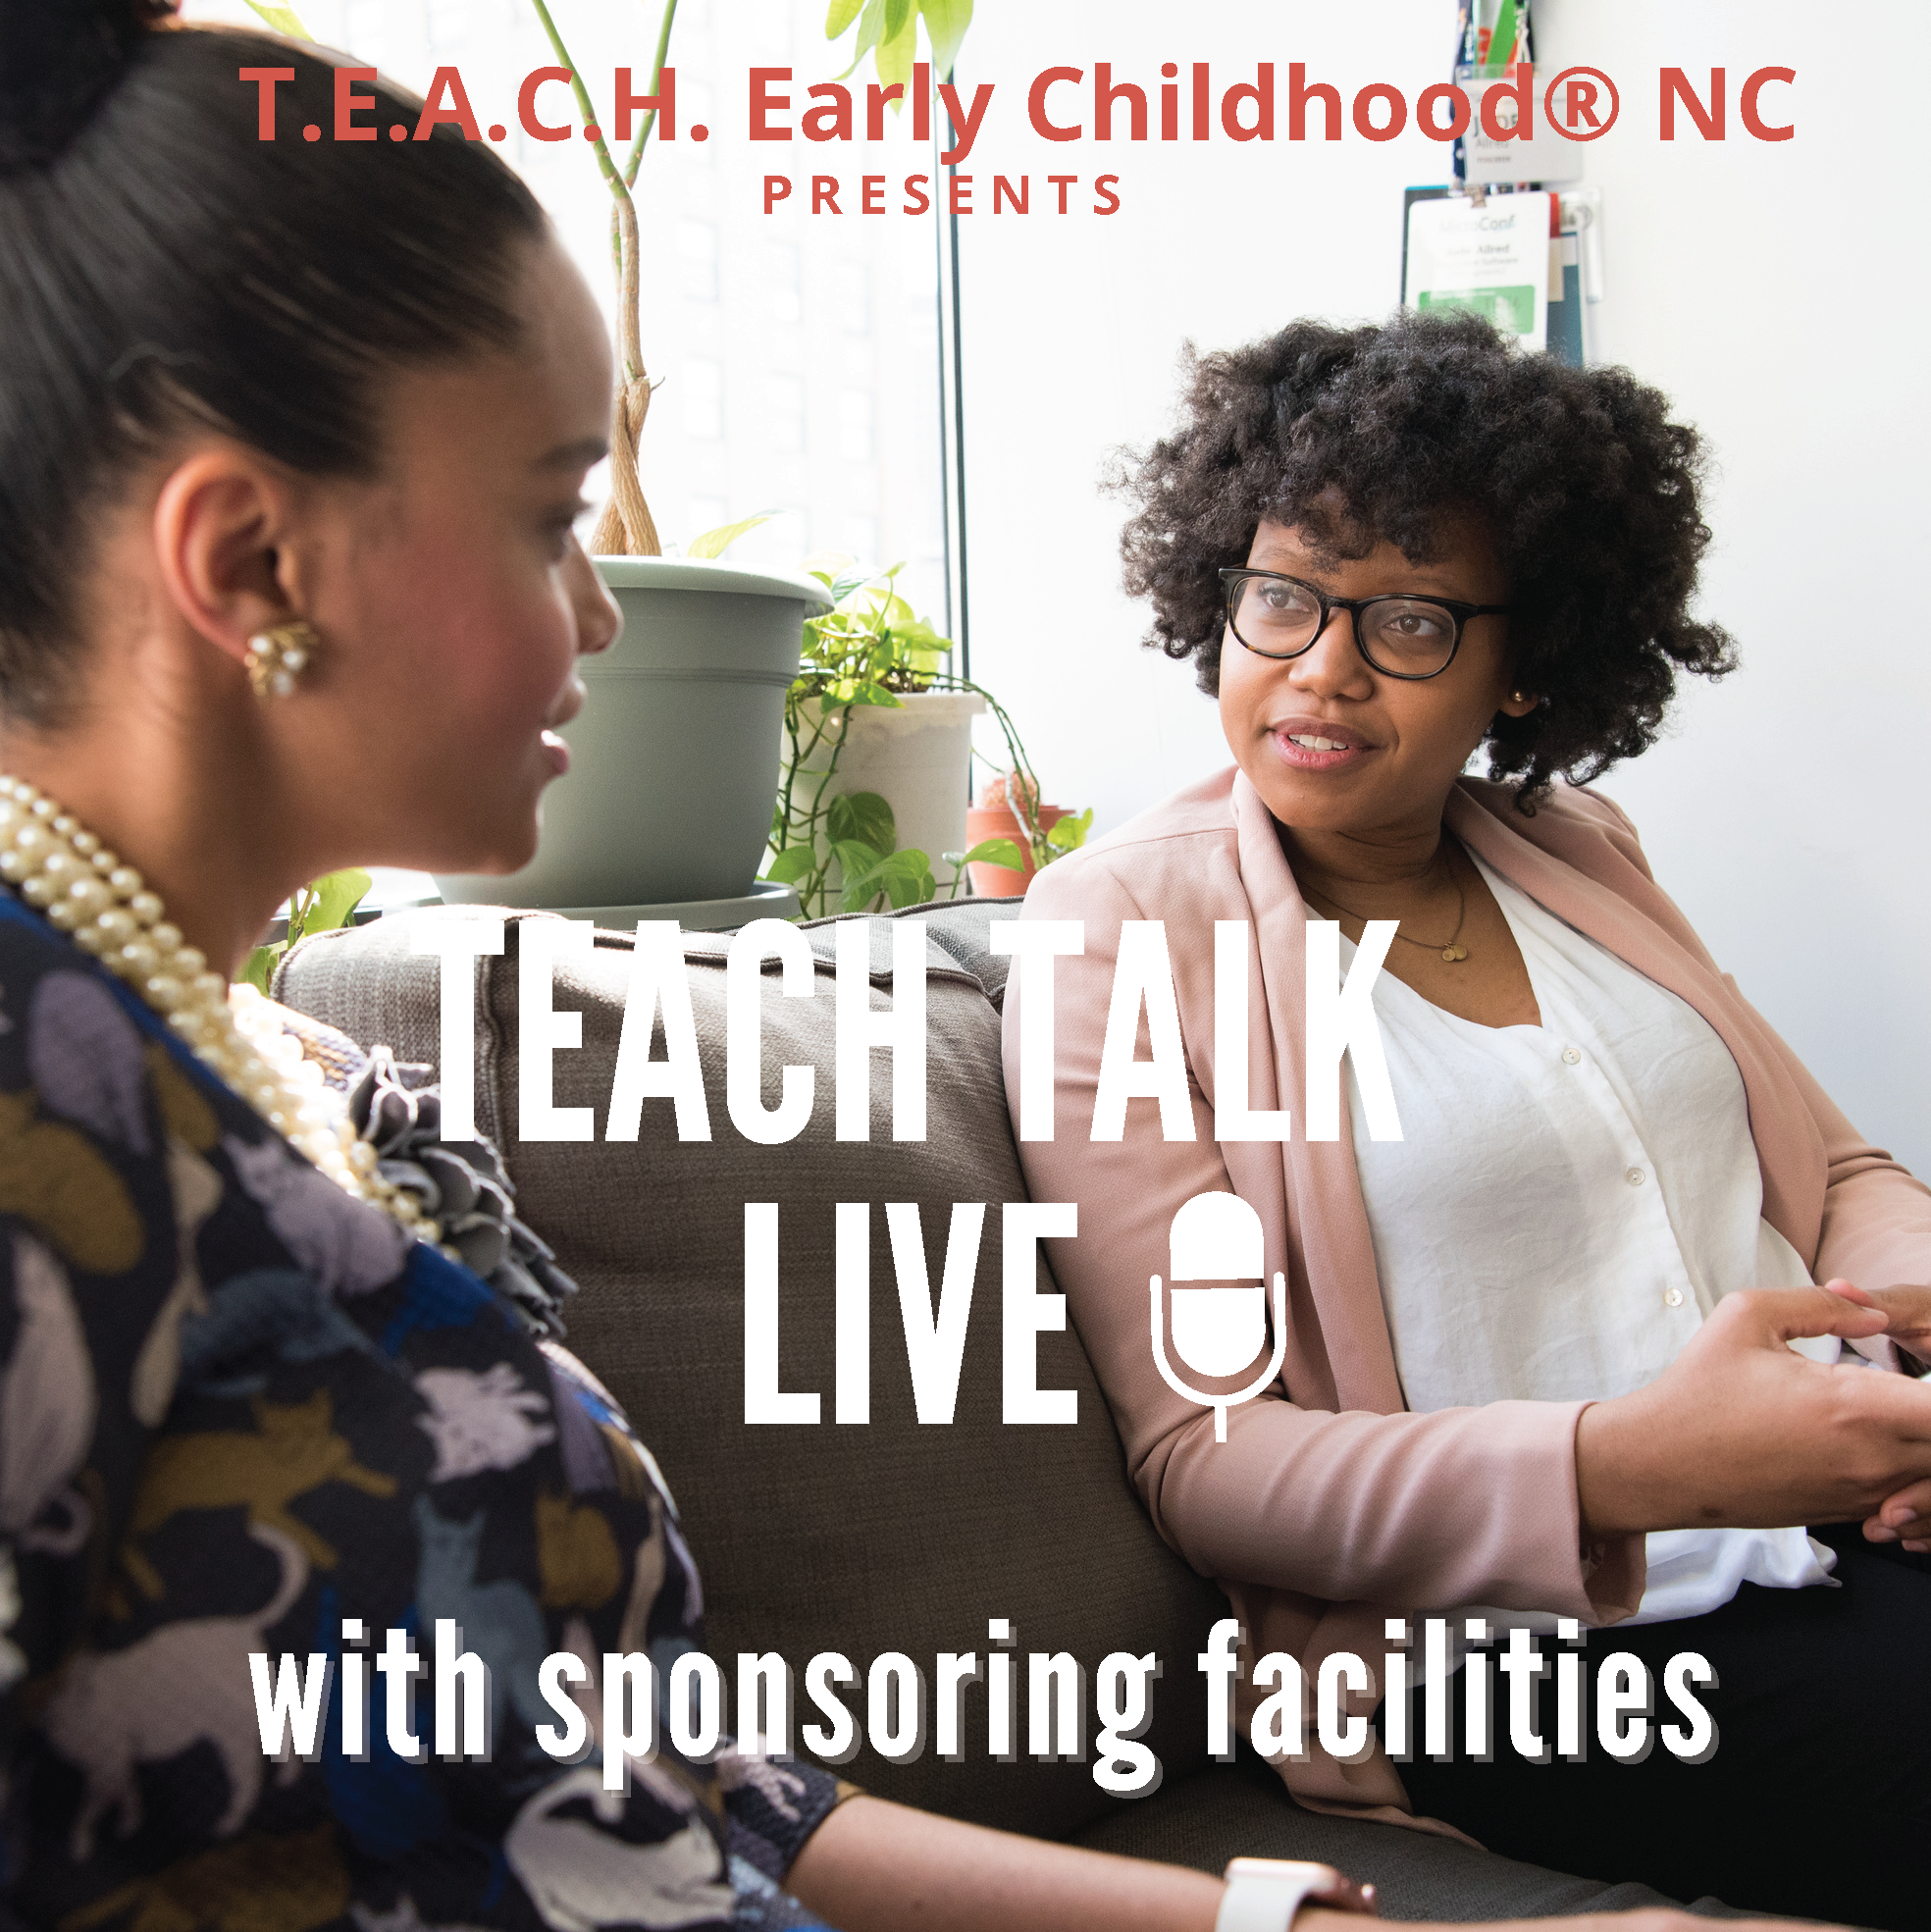 Teach Talk Live flyer